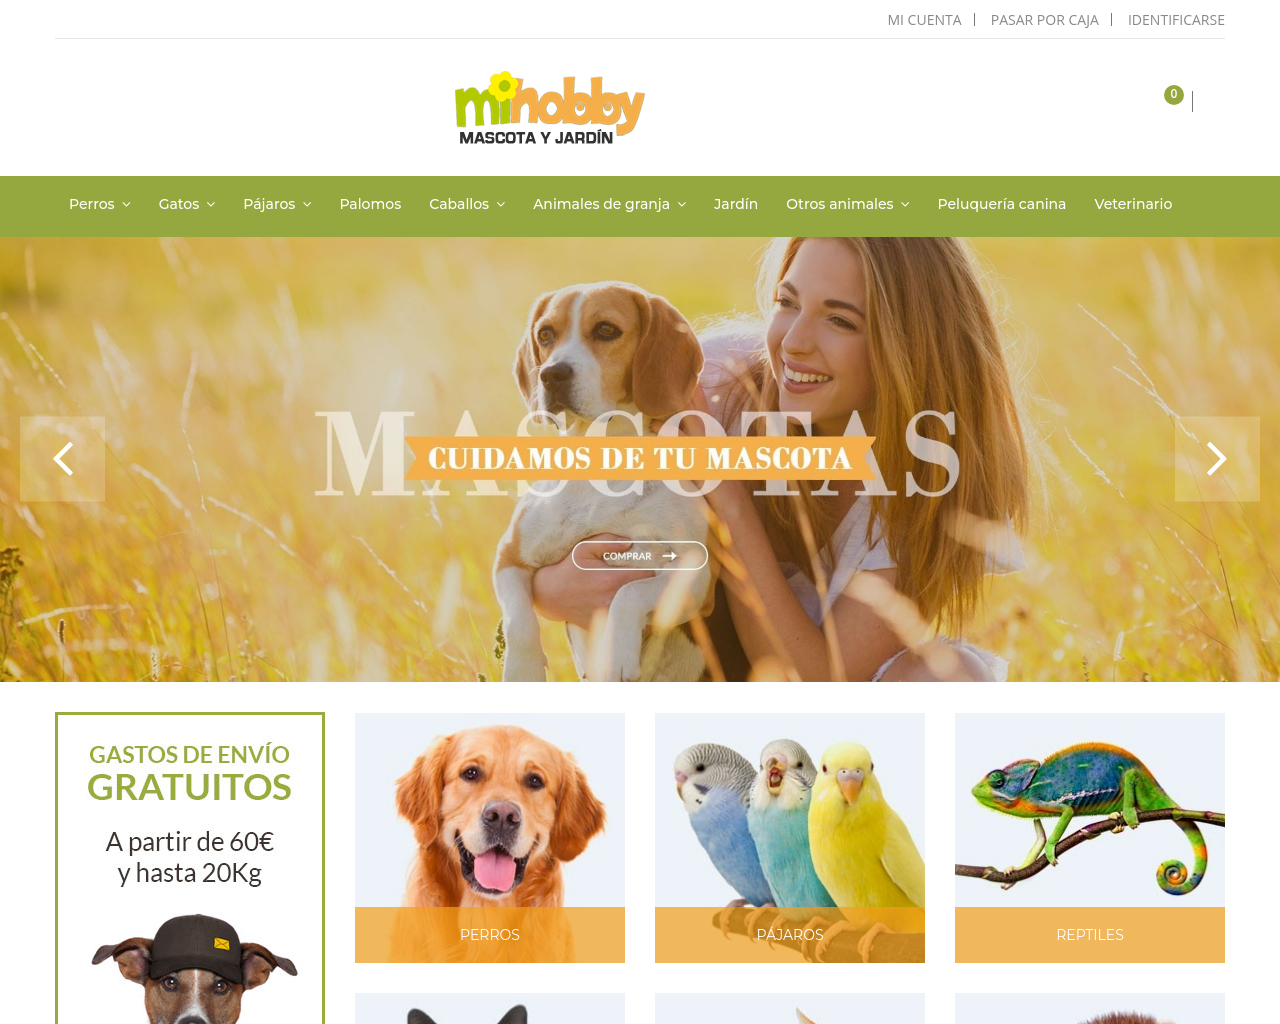 mihobbymascotas.com